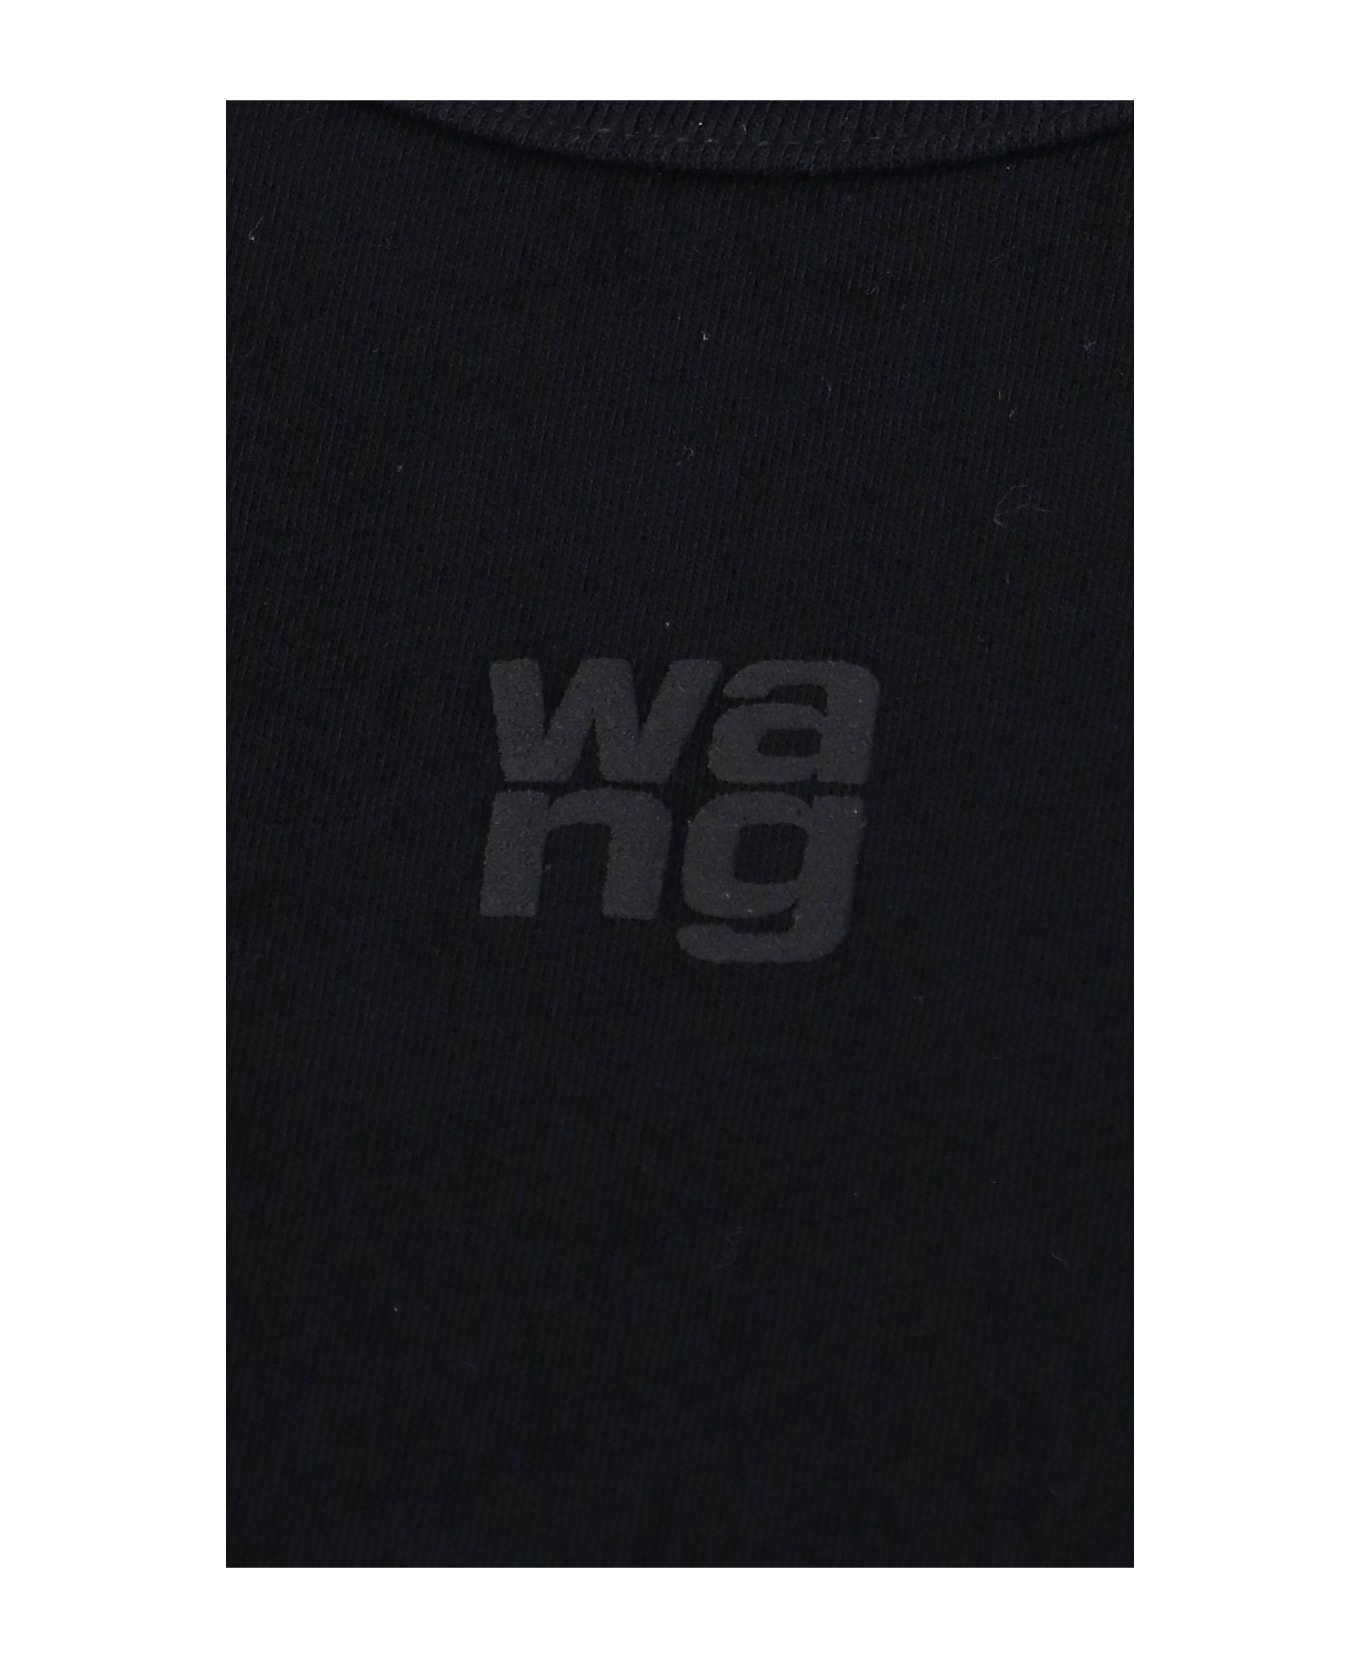 Alexander Wang Logo T-shirt - Black Tシャツ